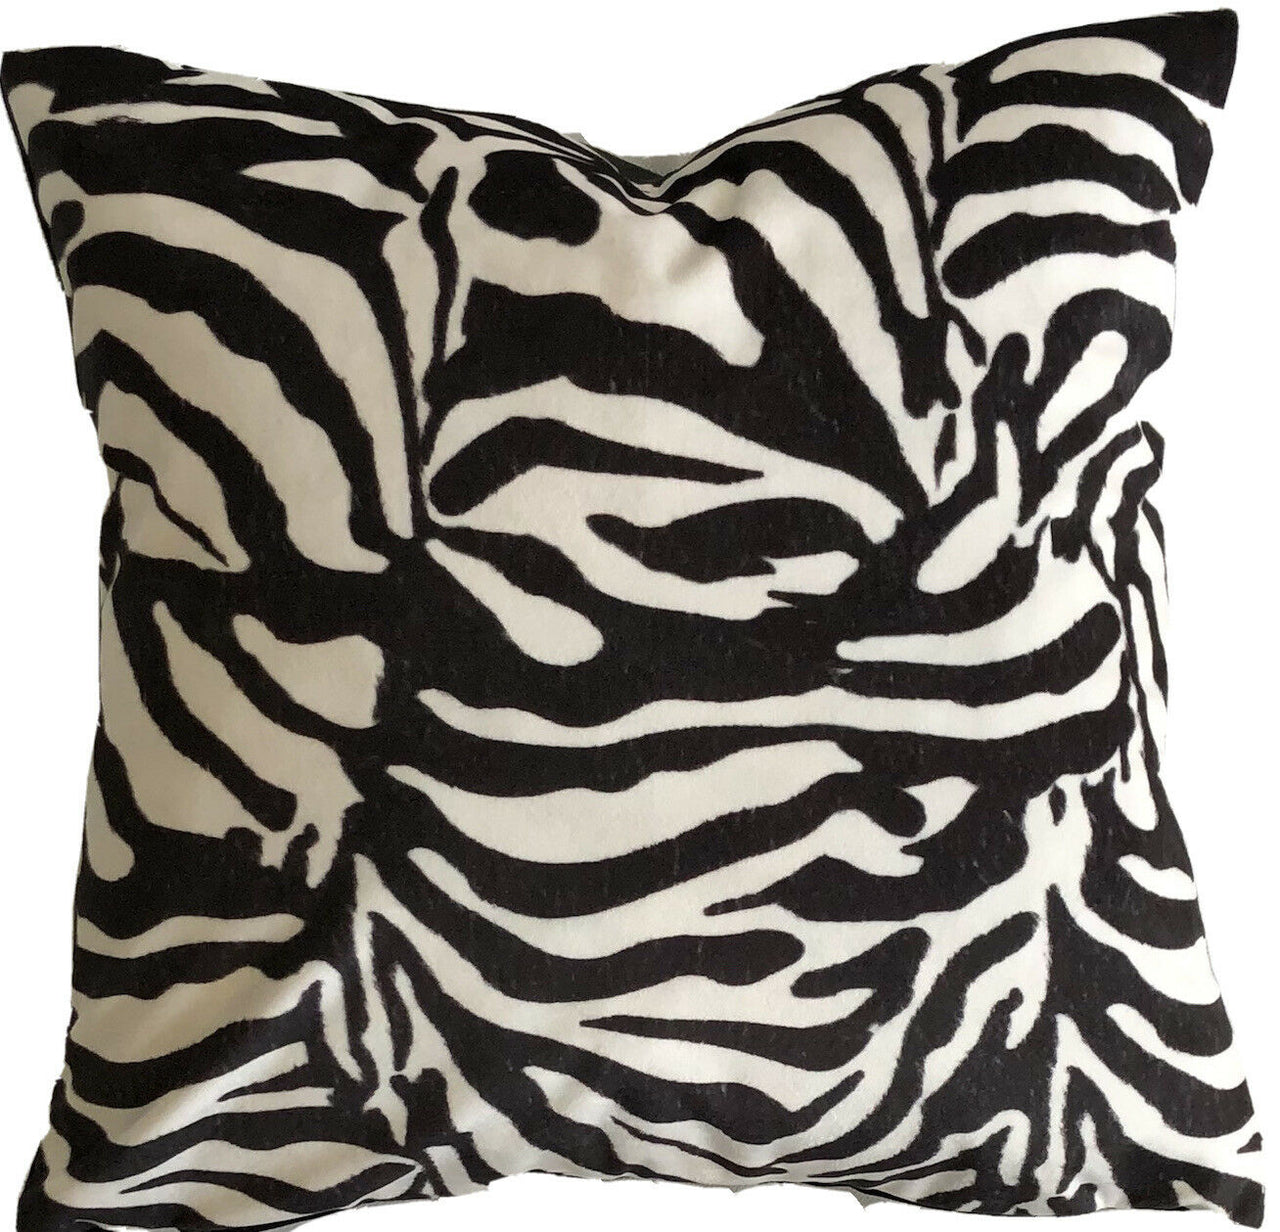 Zebra Jungle Animal Skin Printed Italian Velvet Cushion Cover Black White Stripe